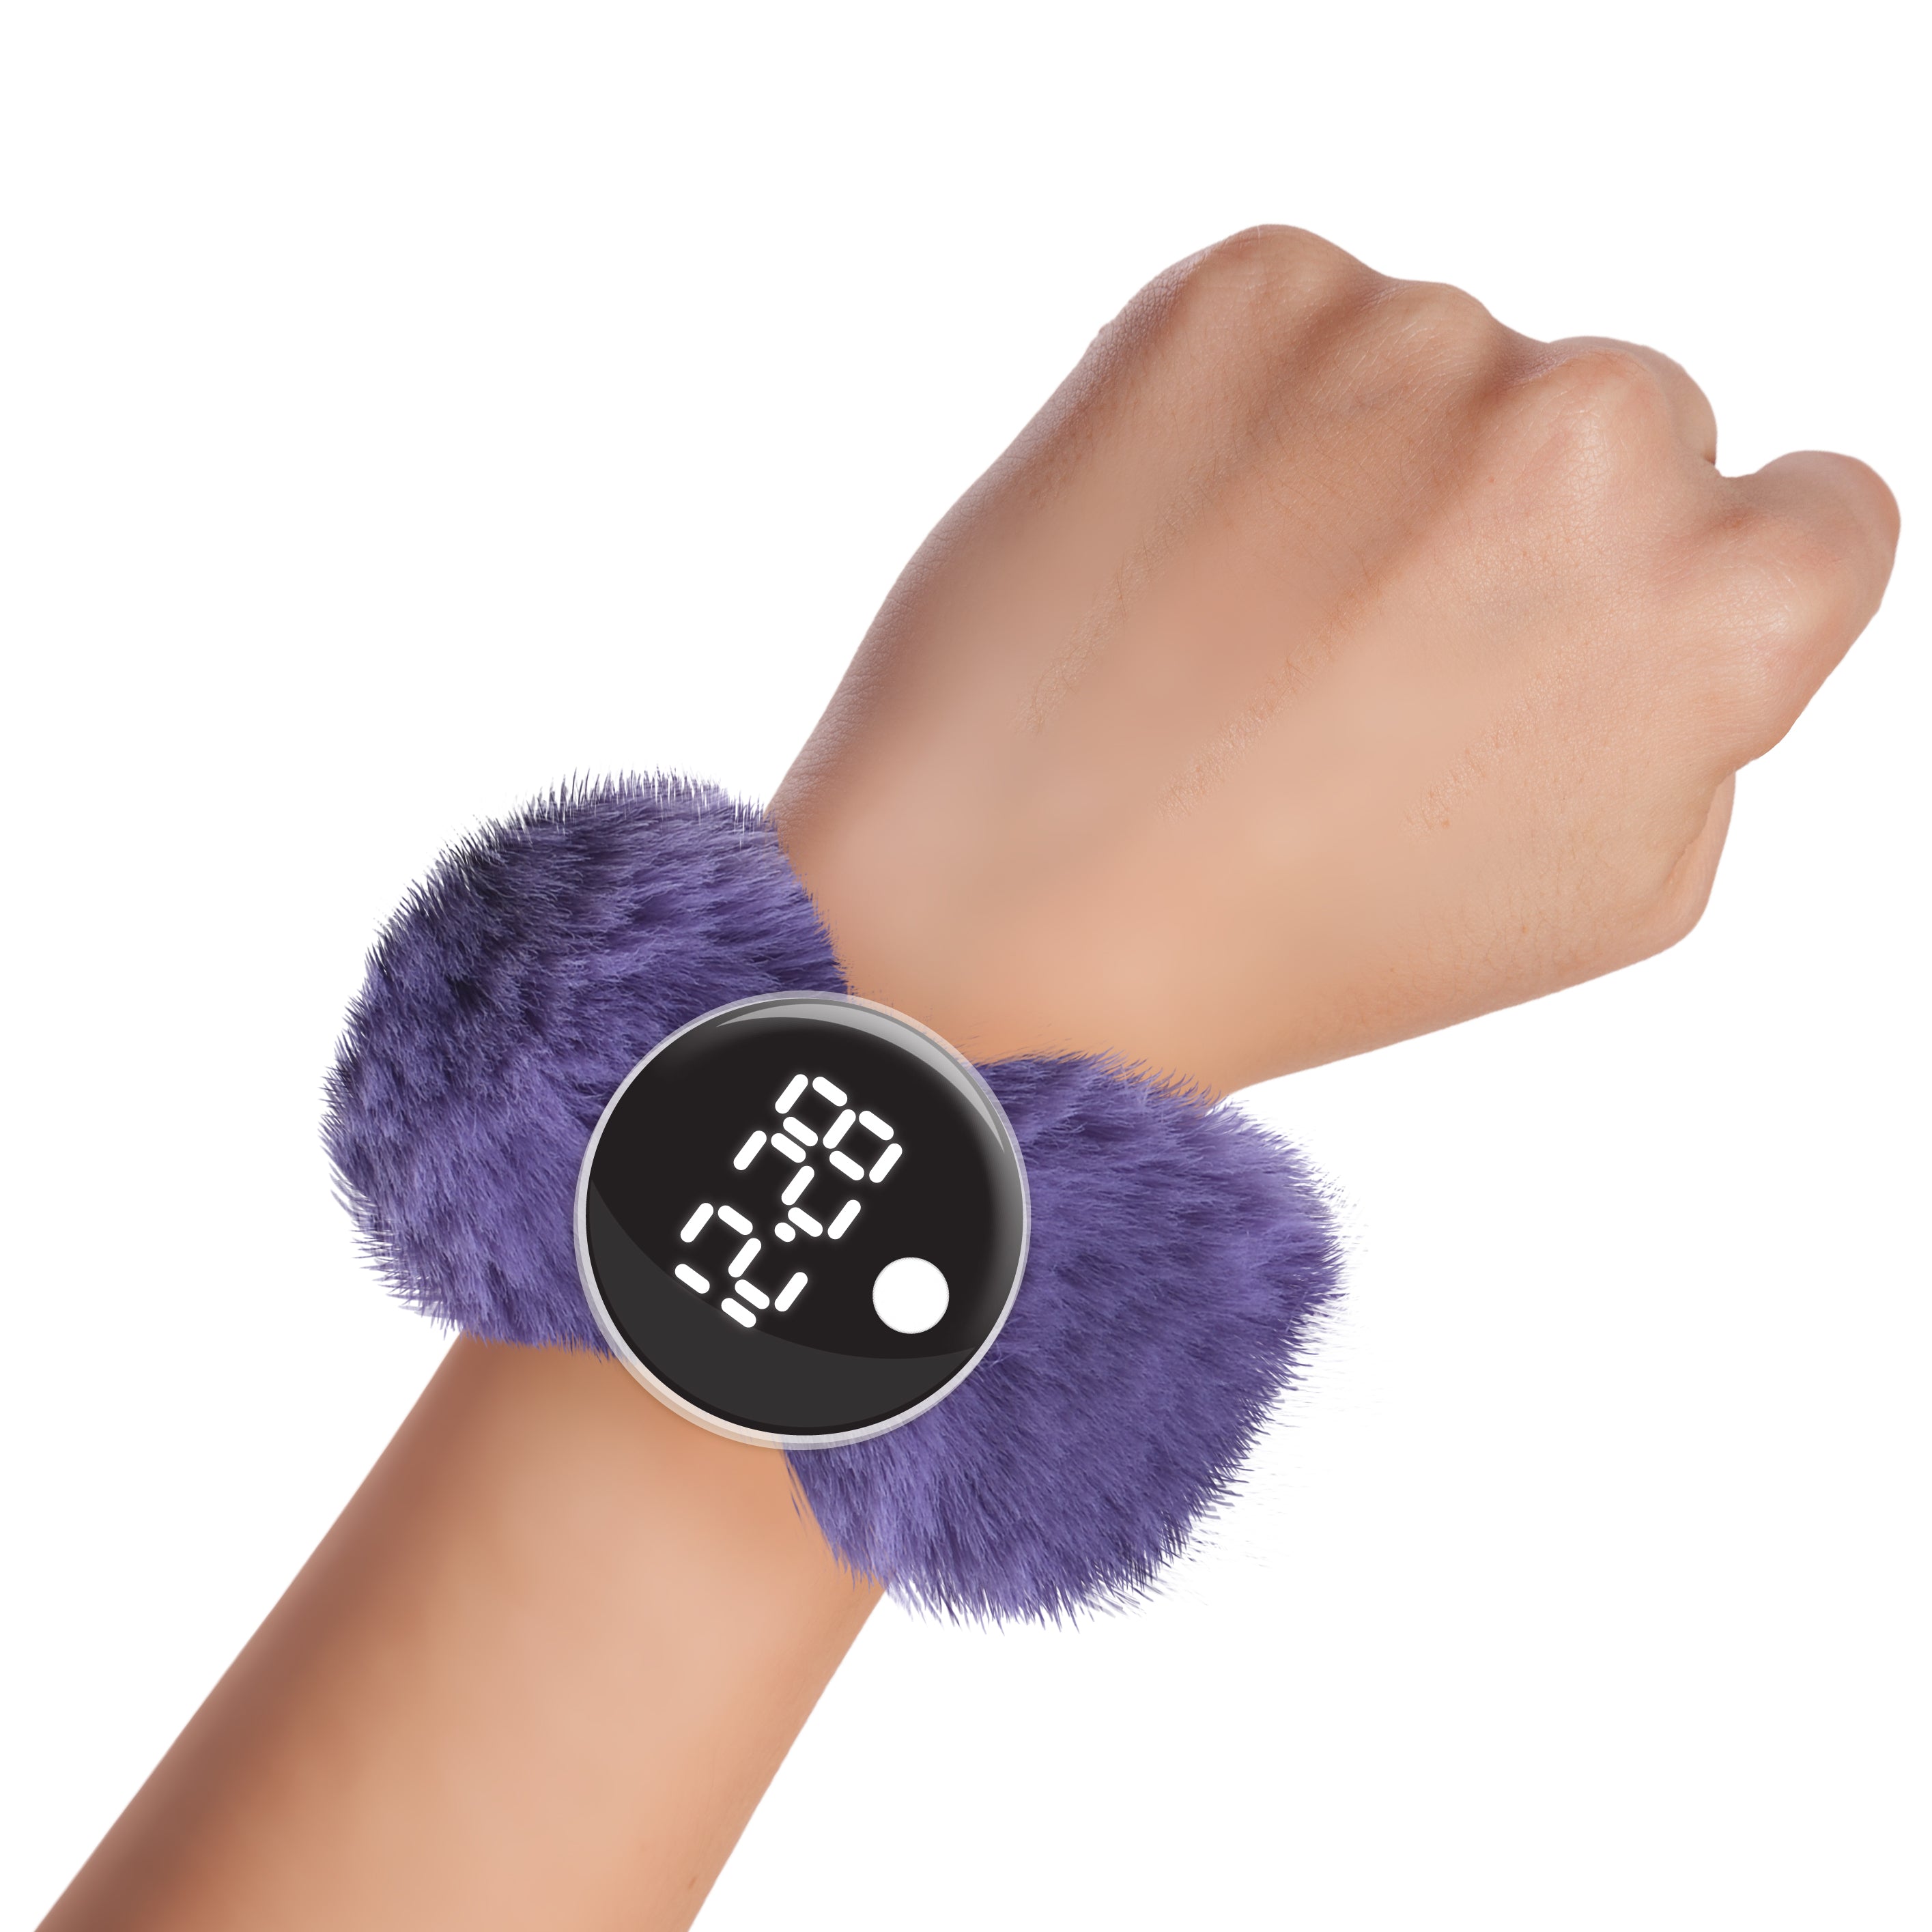 Digis - Grape Jelly Digital Slap Watch